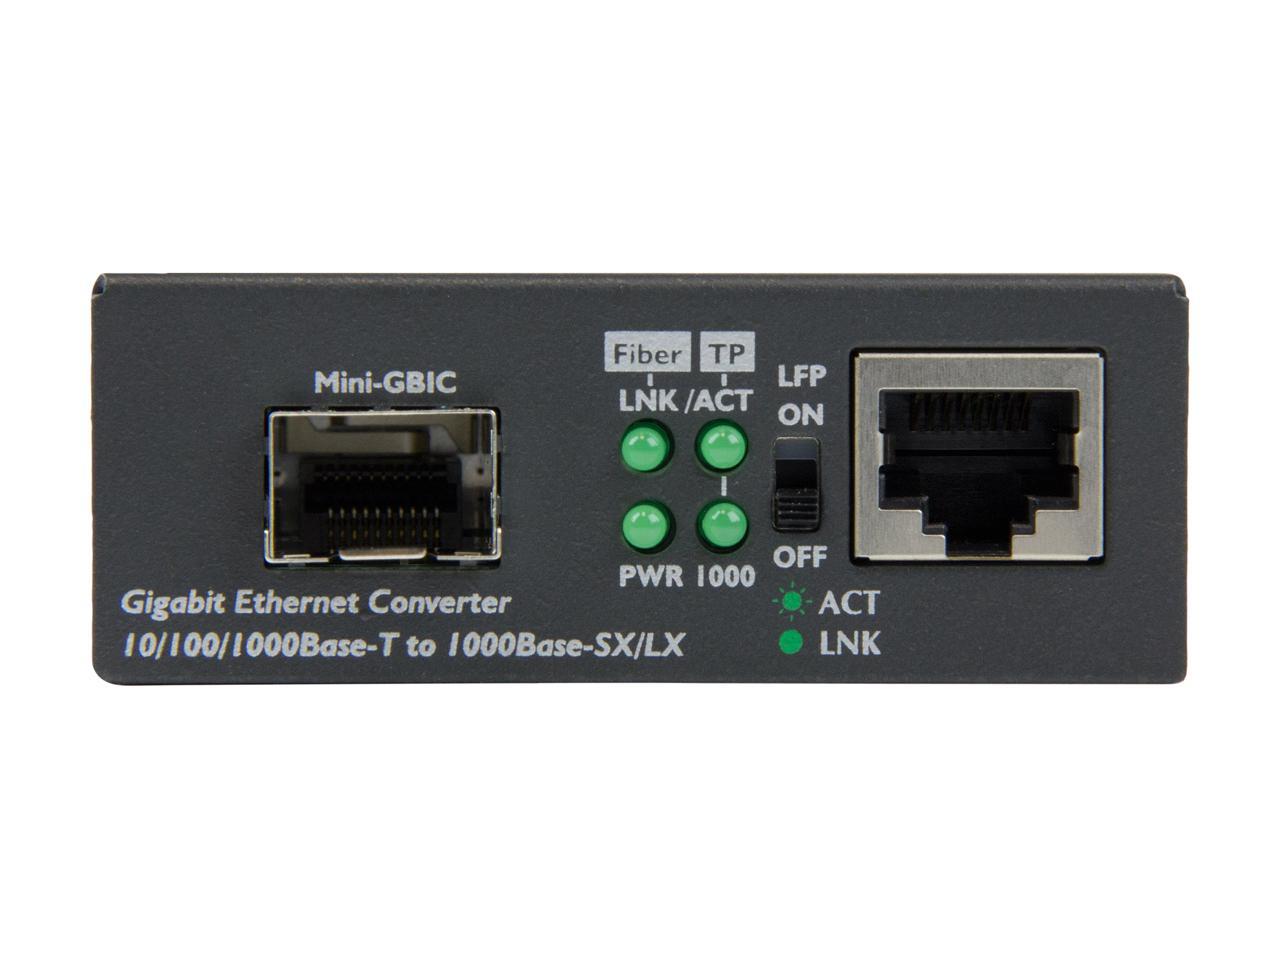 StarTech.com Gigabit Ethernet Fiber Media Converter with Open SFP Slot - Supports 10/100/1000 Networks